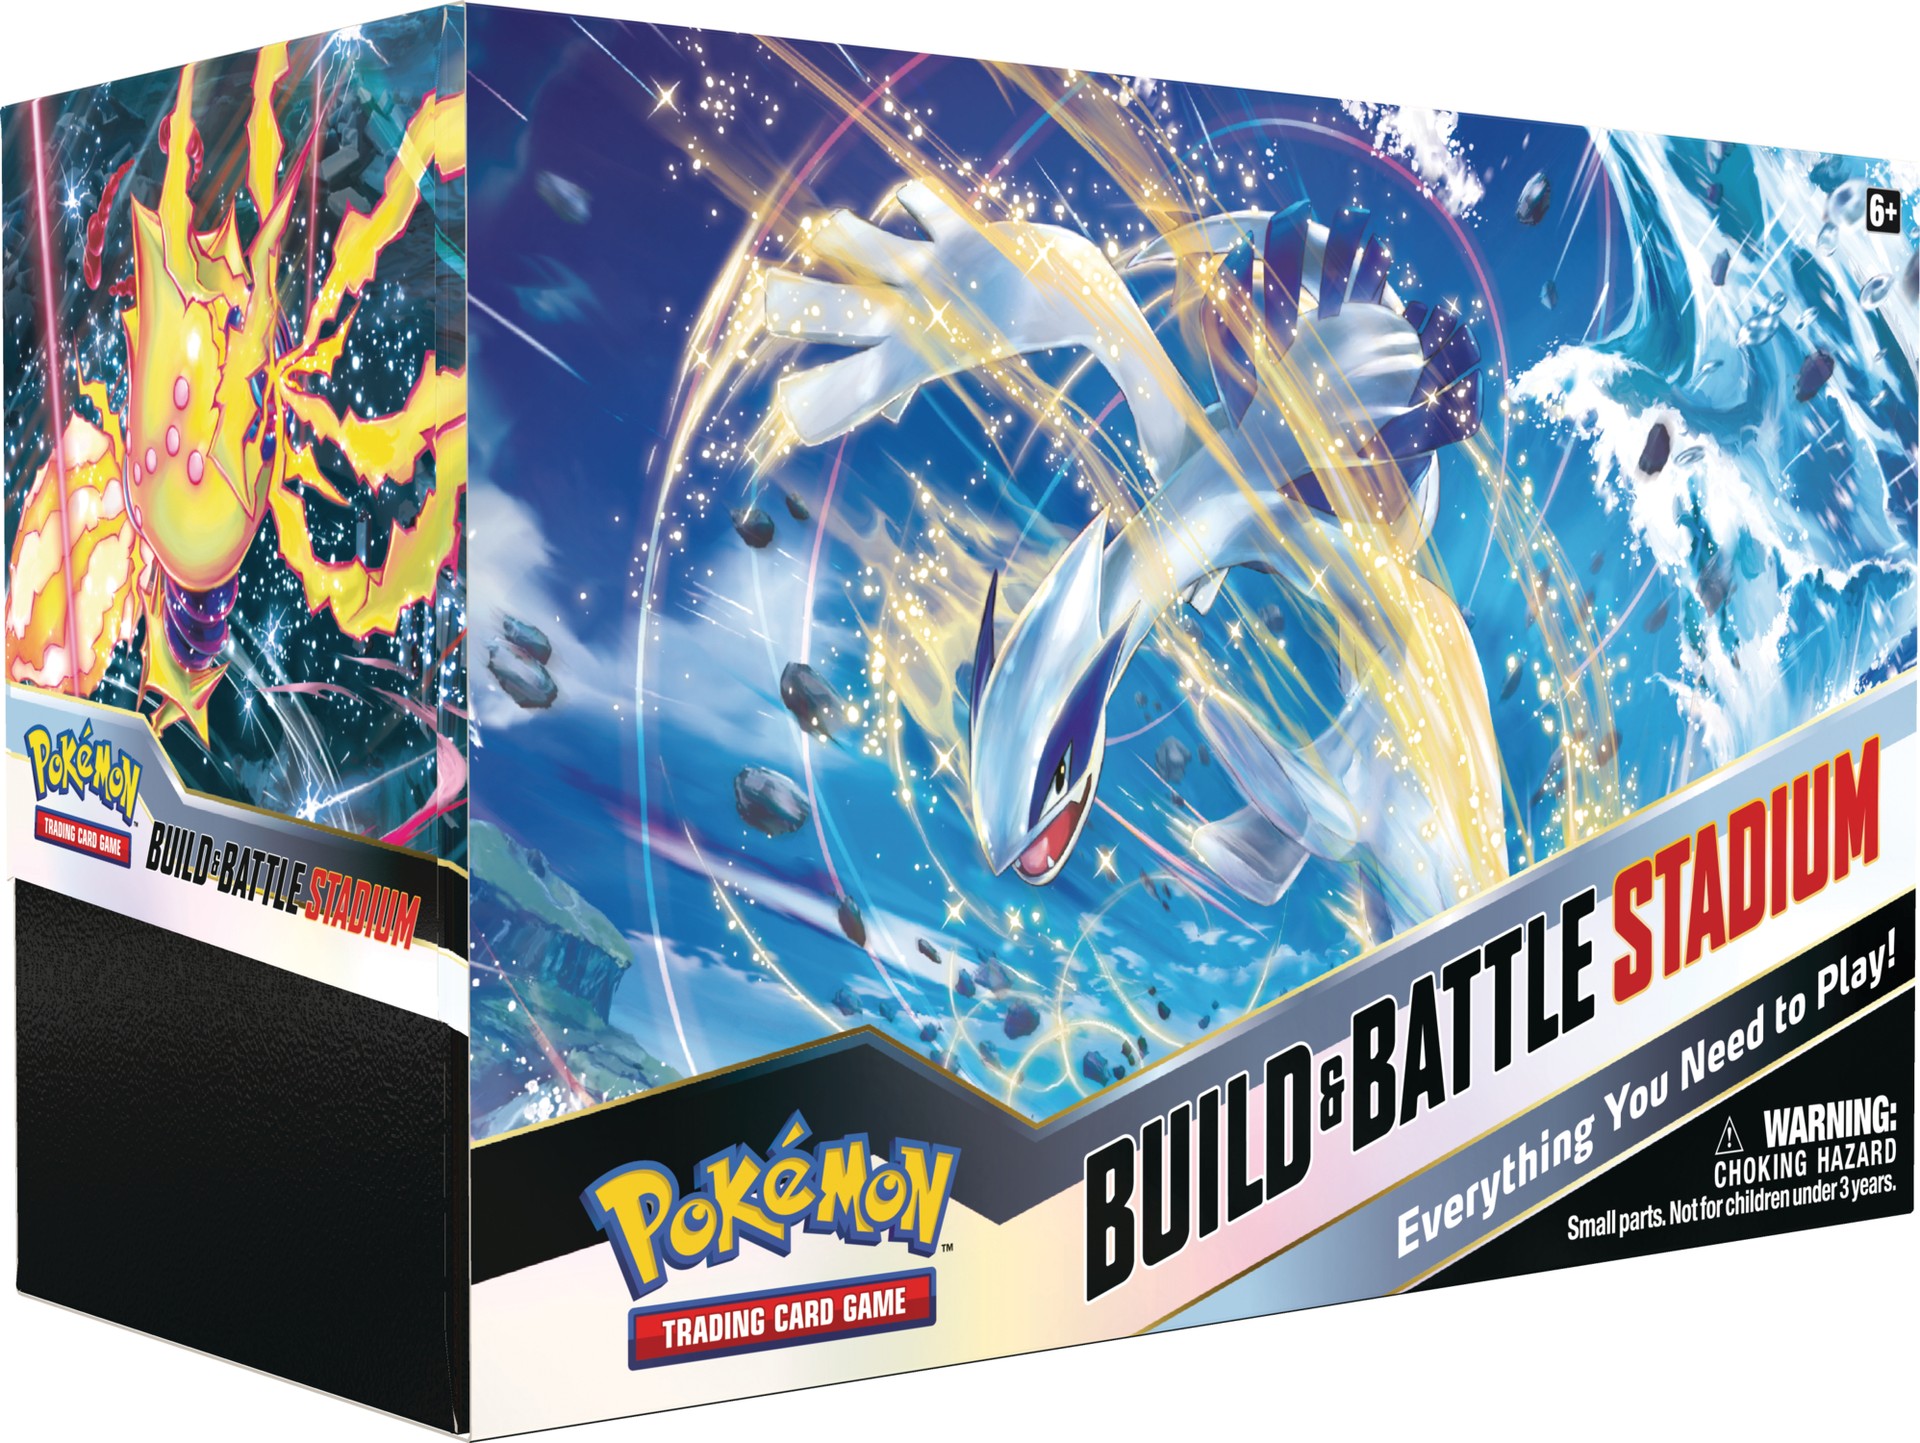 Pokémon Silver Tempest build and battle stadium